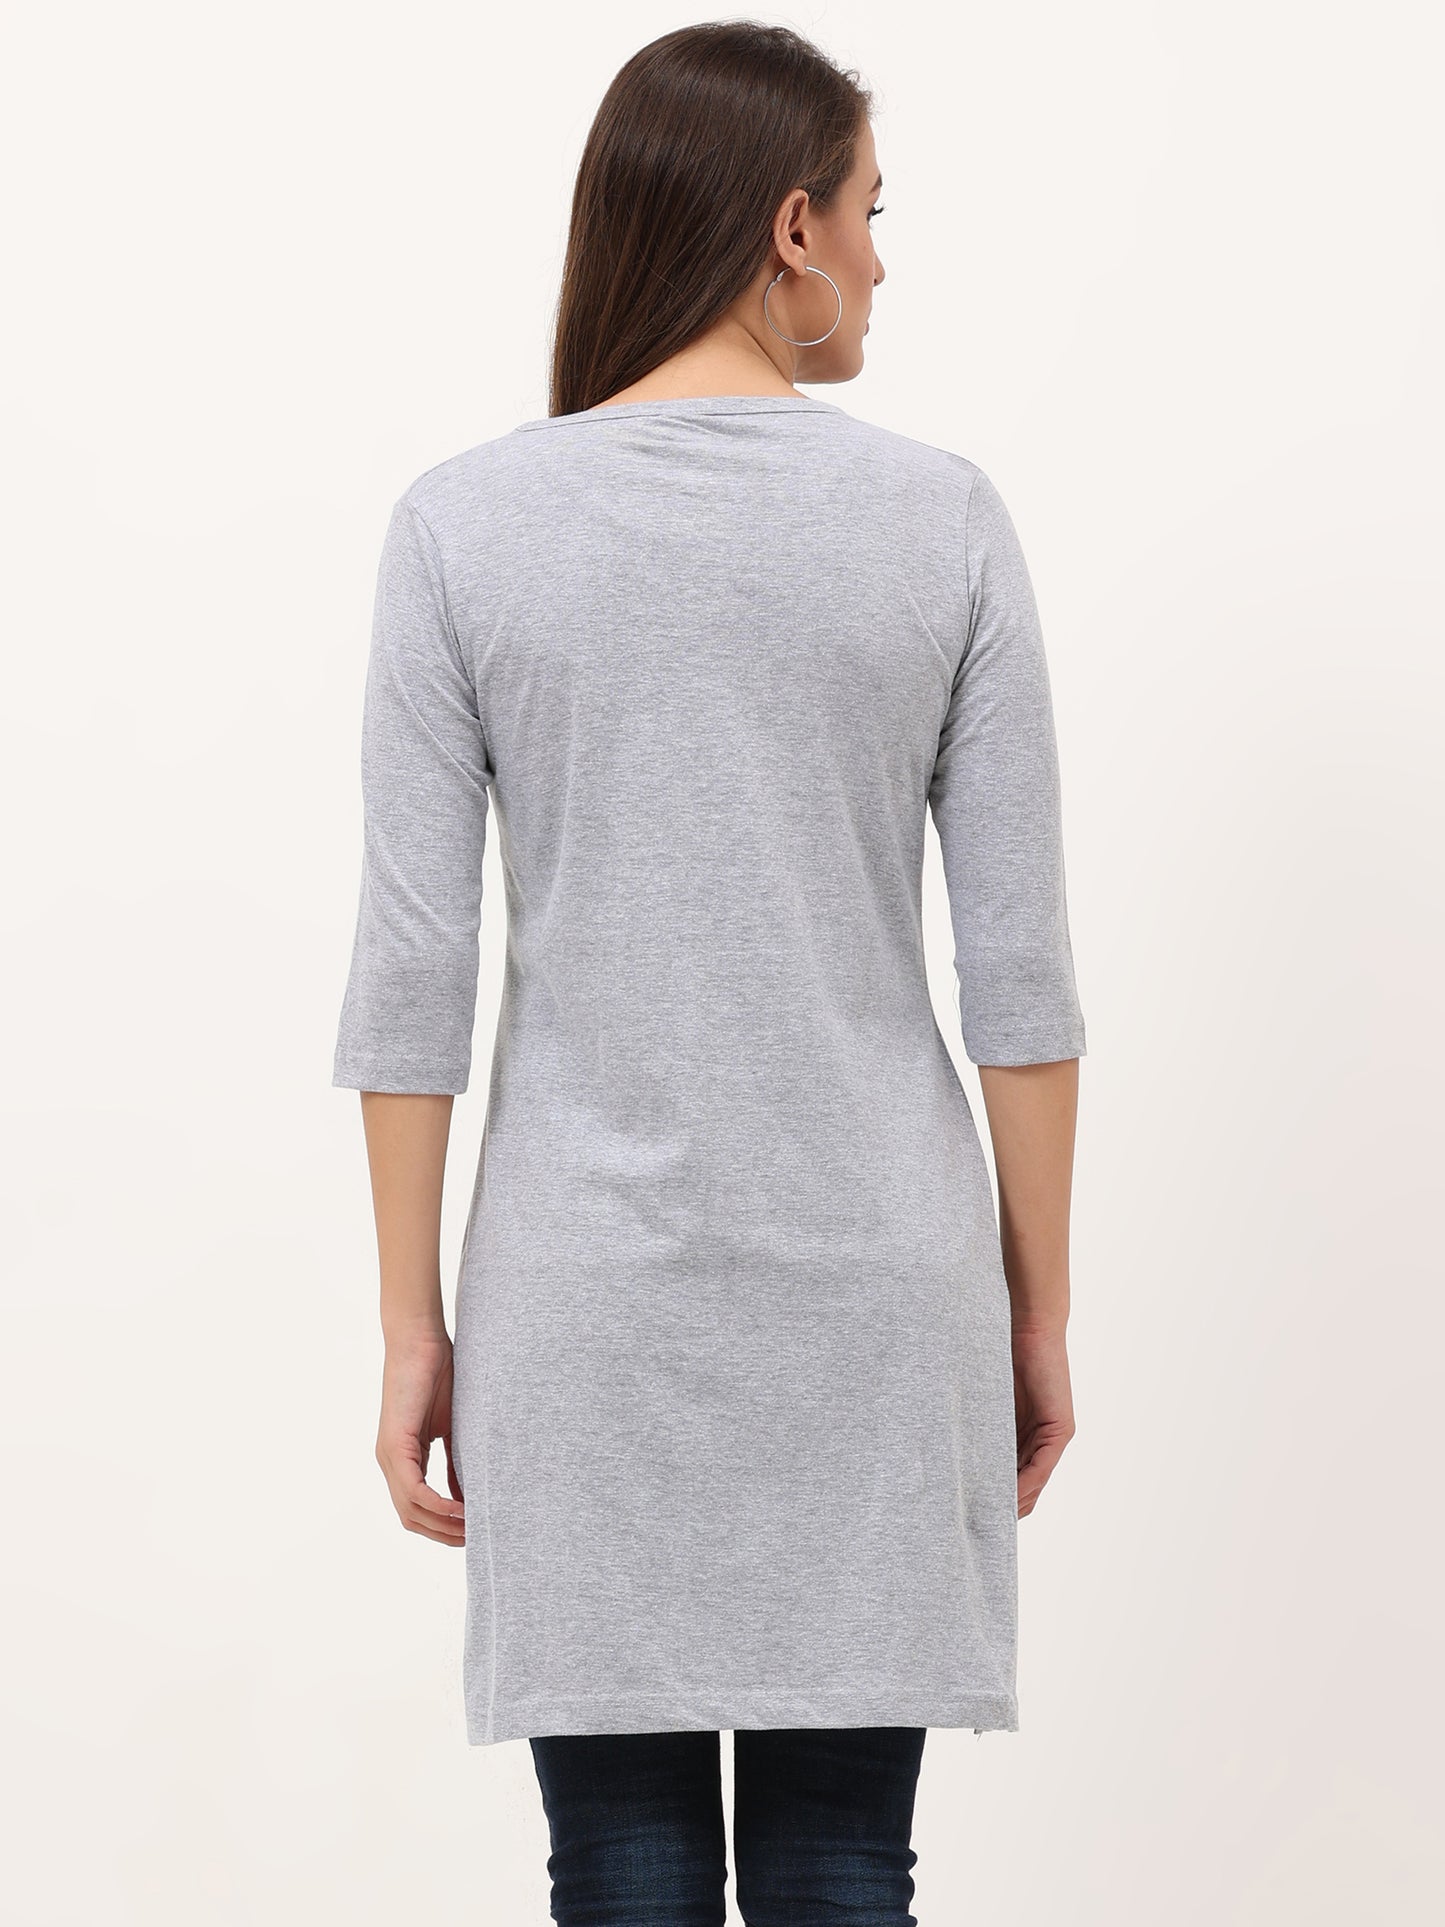 Women's Cotton Printed 3/4 Sleeve Grey Melange Color Long Top